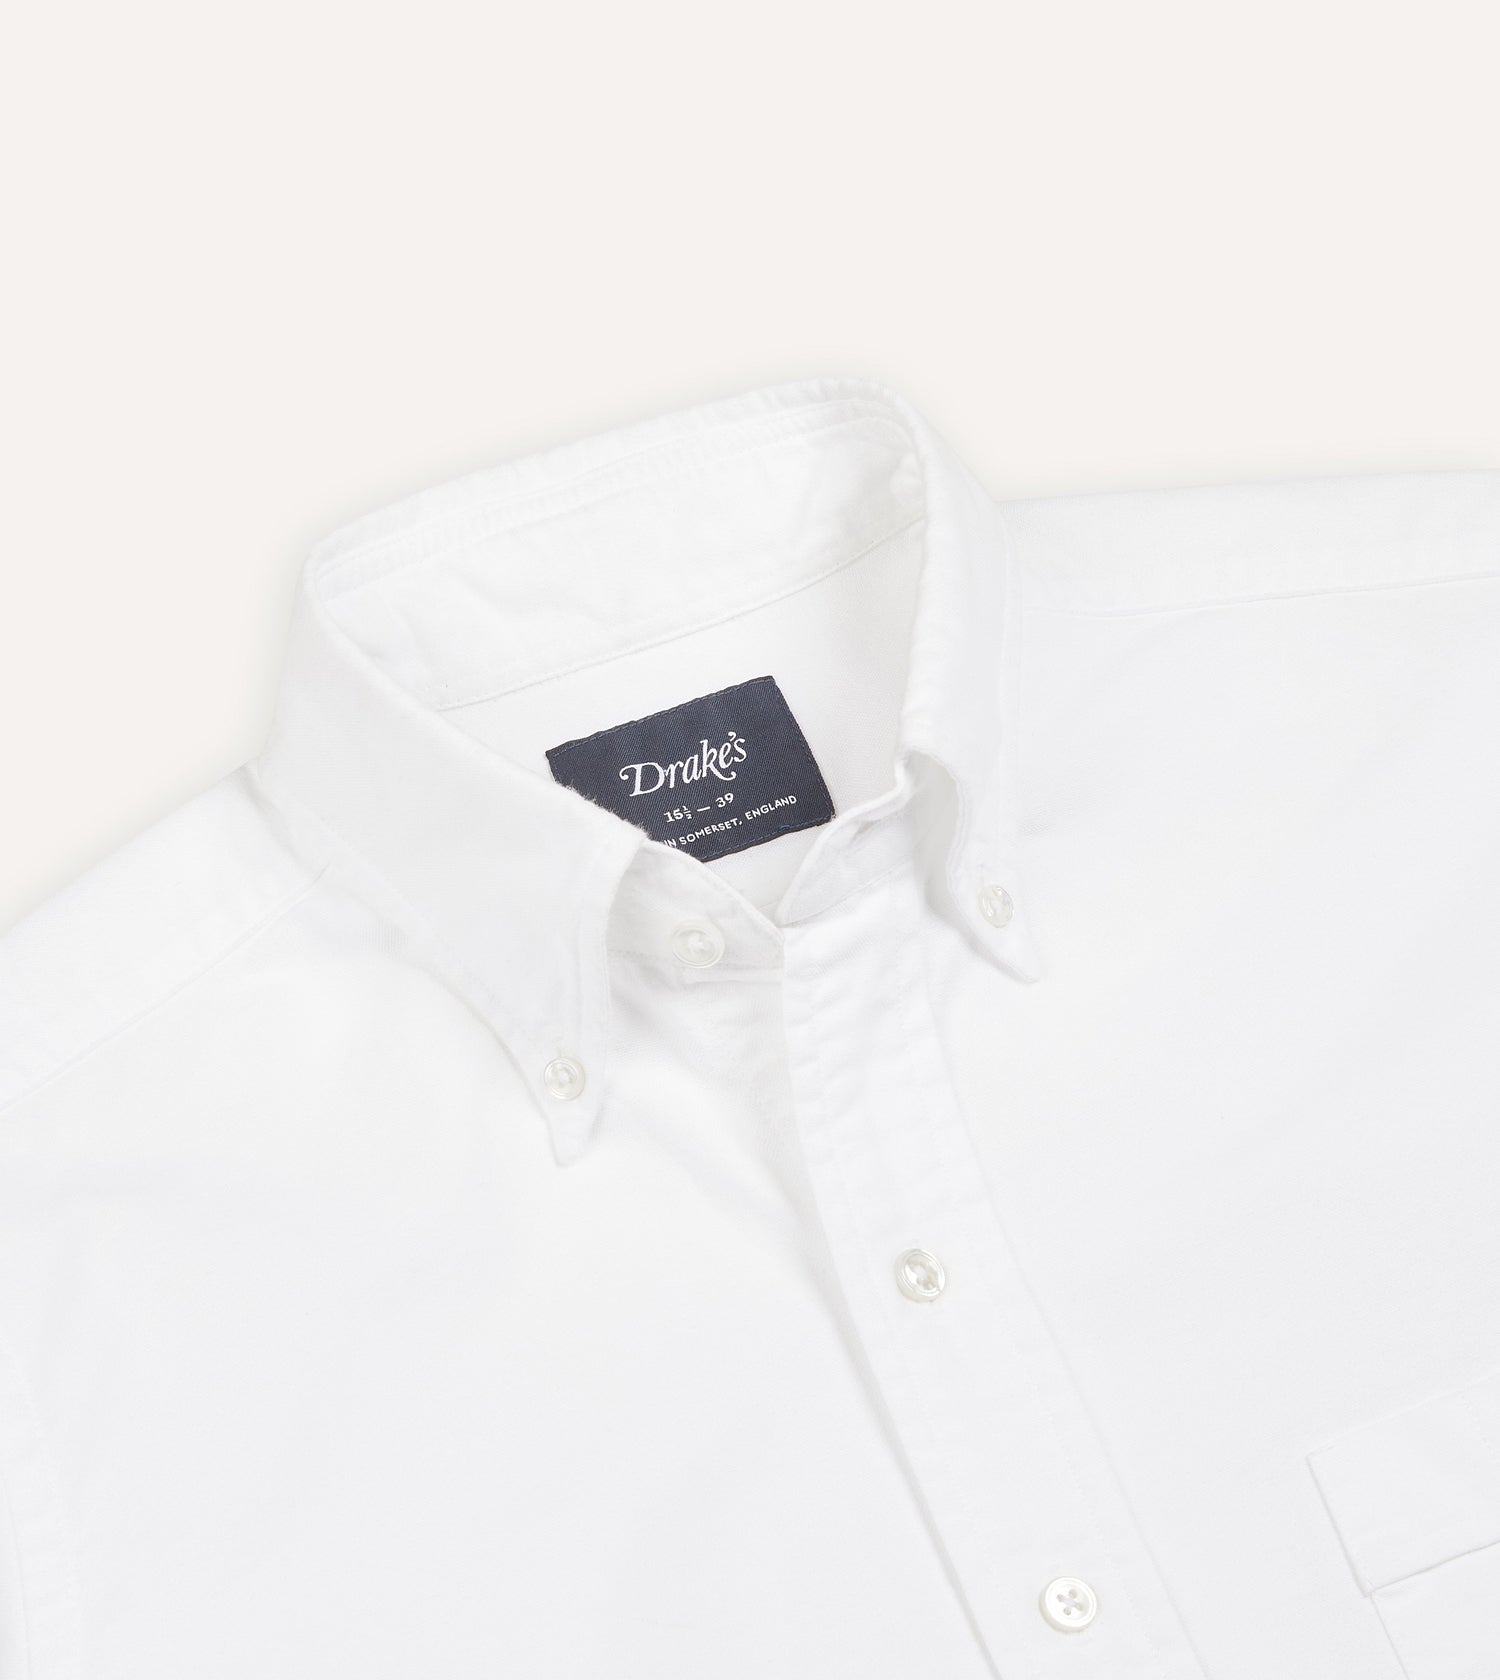 White Oxford Cotton Cloth Button-Down Shirt